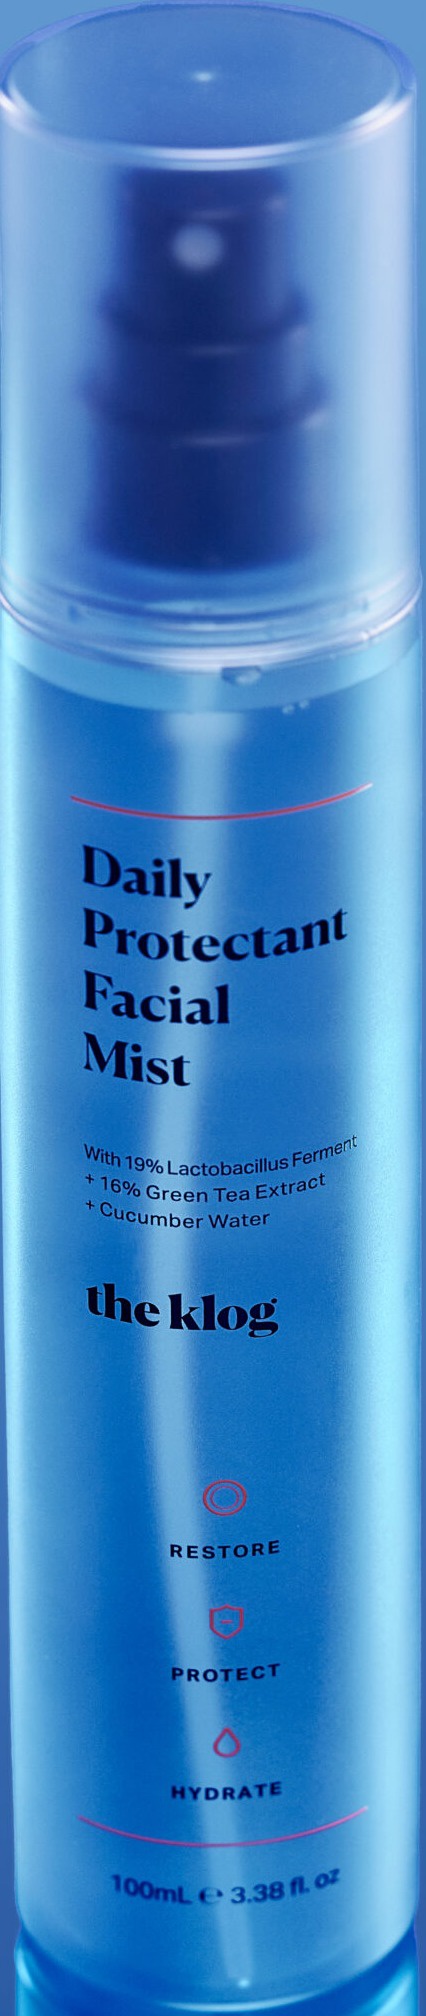 THE KLOG Daily Protectant Facial Mist